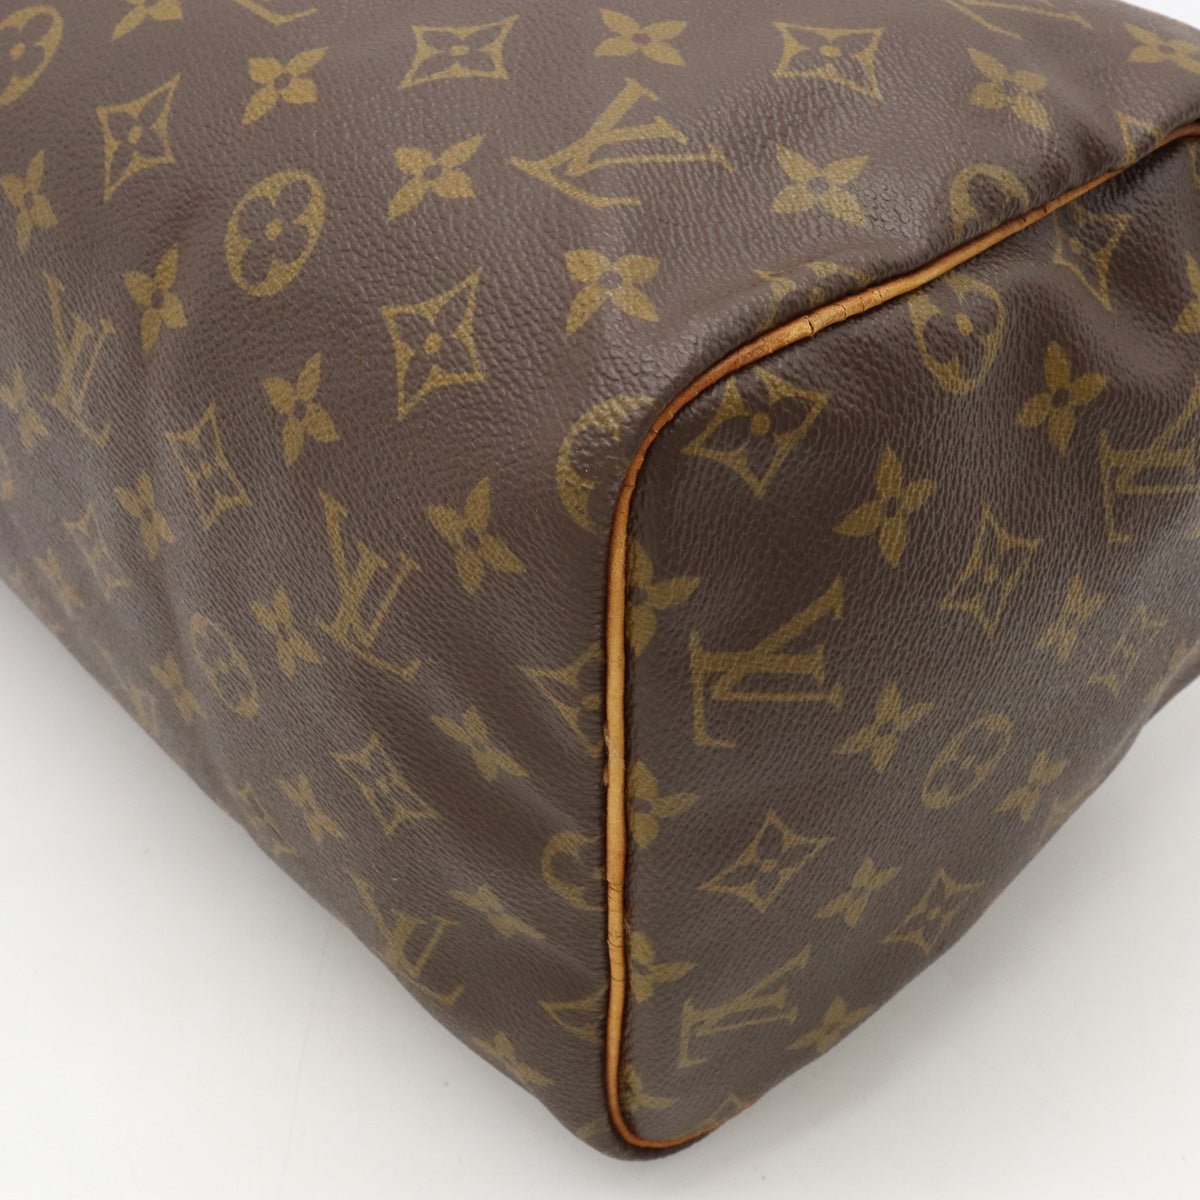 Authenticated Used Louis Vuitton Monogram Speedy 30 M41526 Handbag